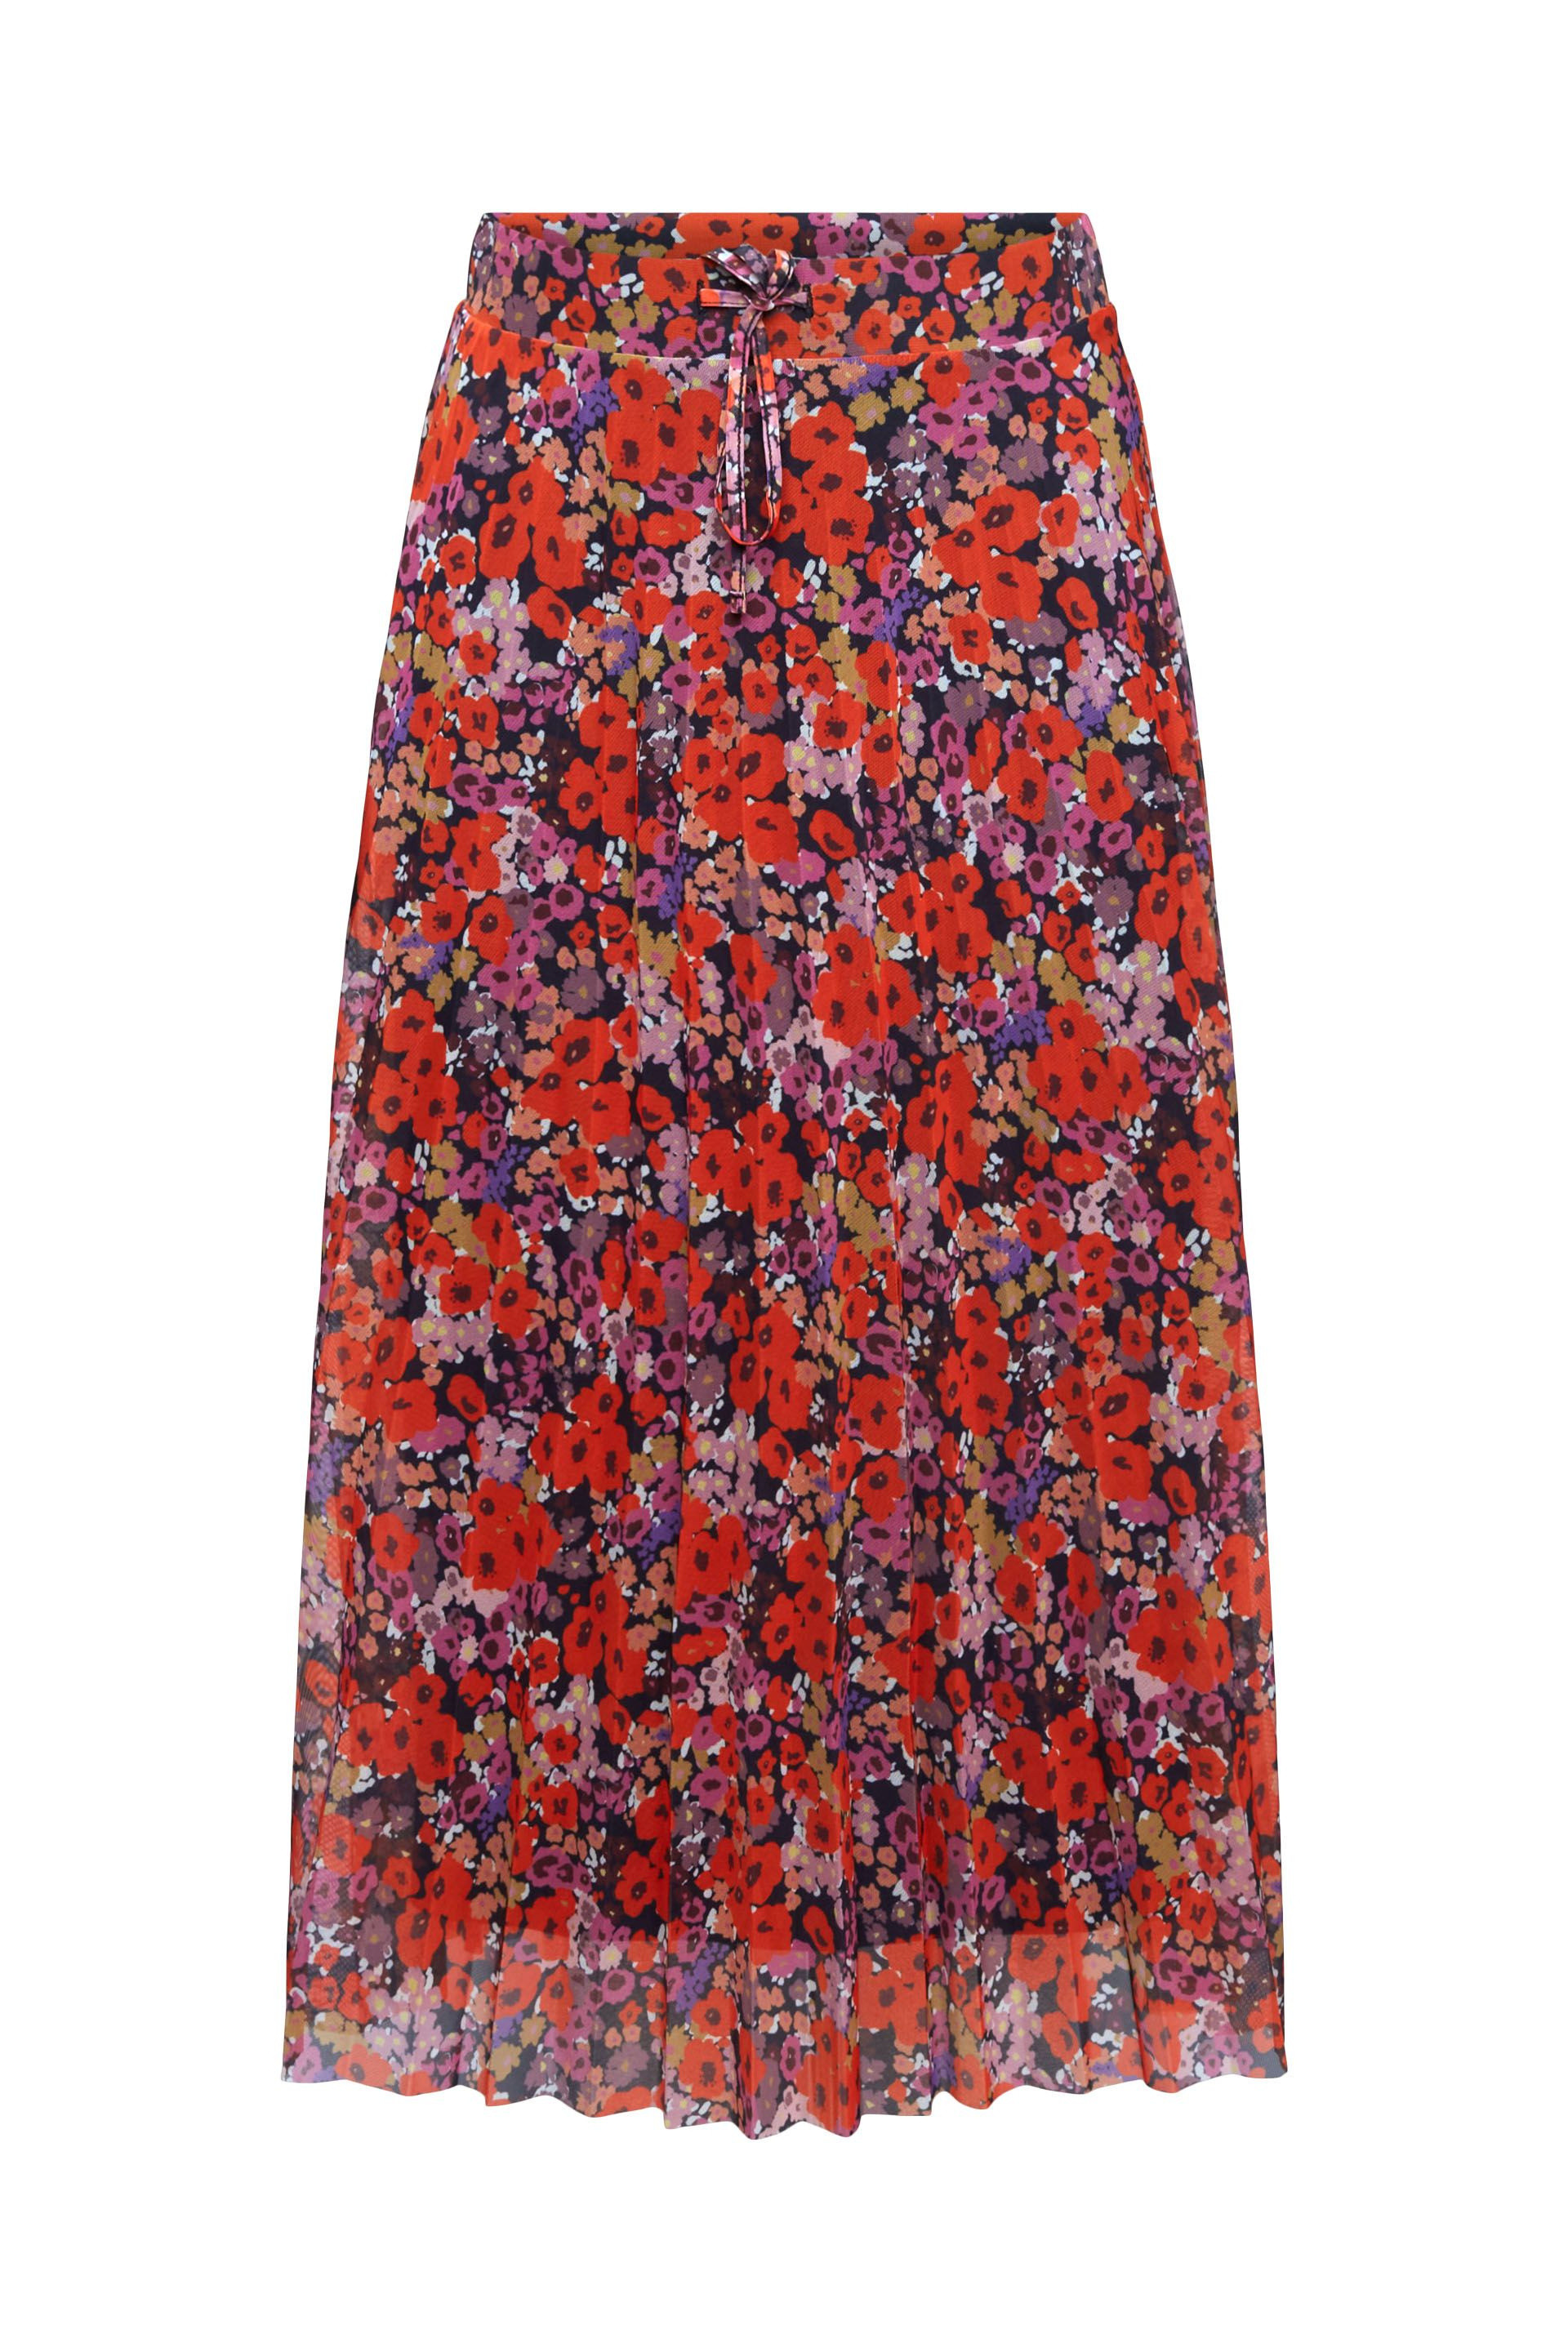 Esprit - Floral pleated skirt, Multicolor, large image number 0